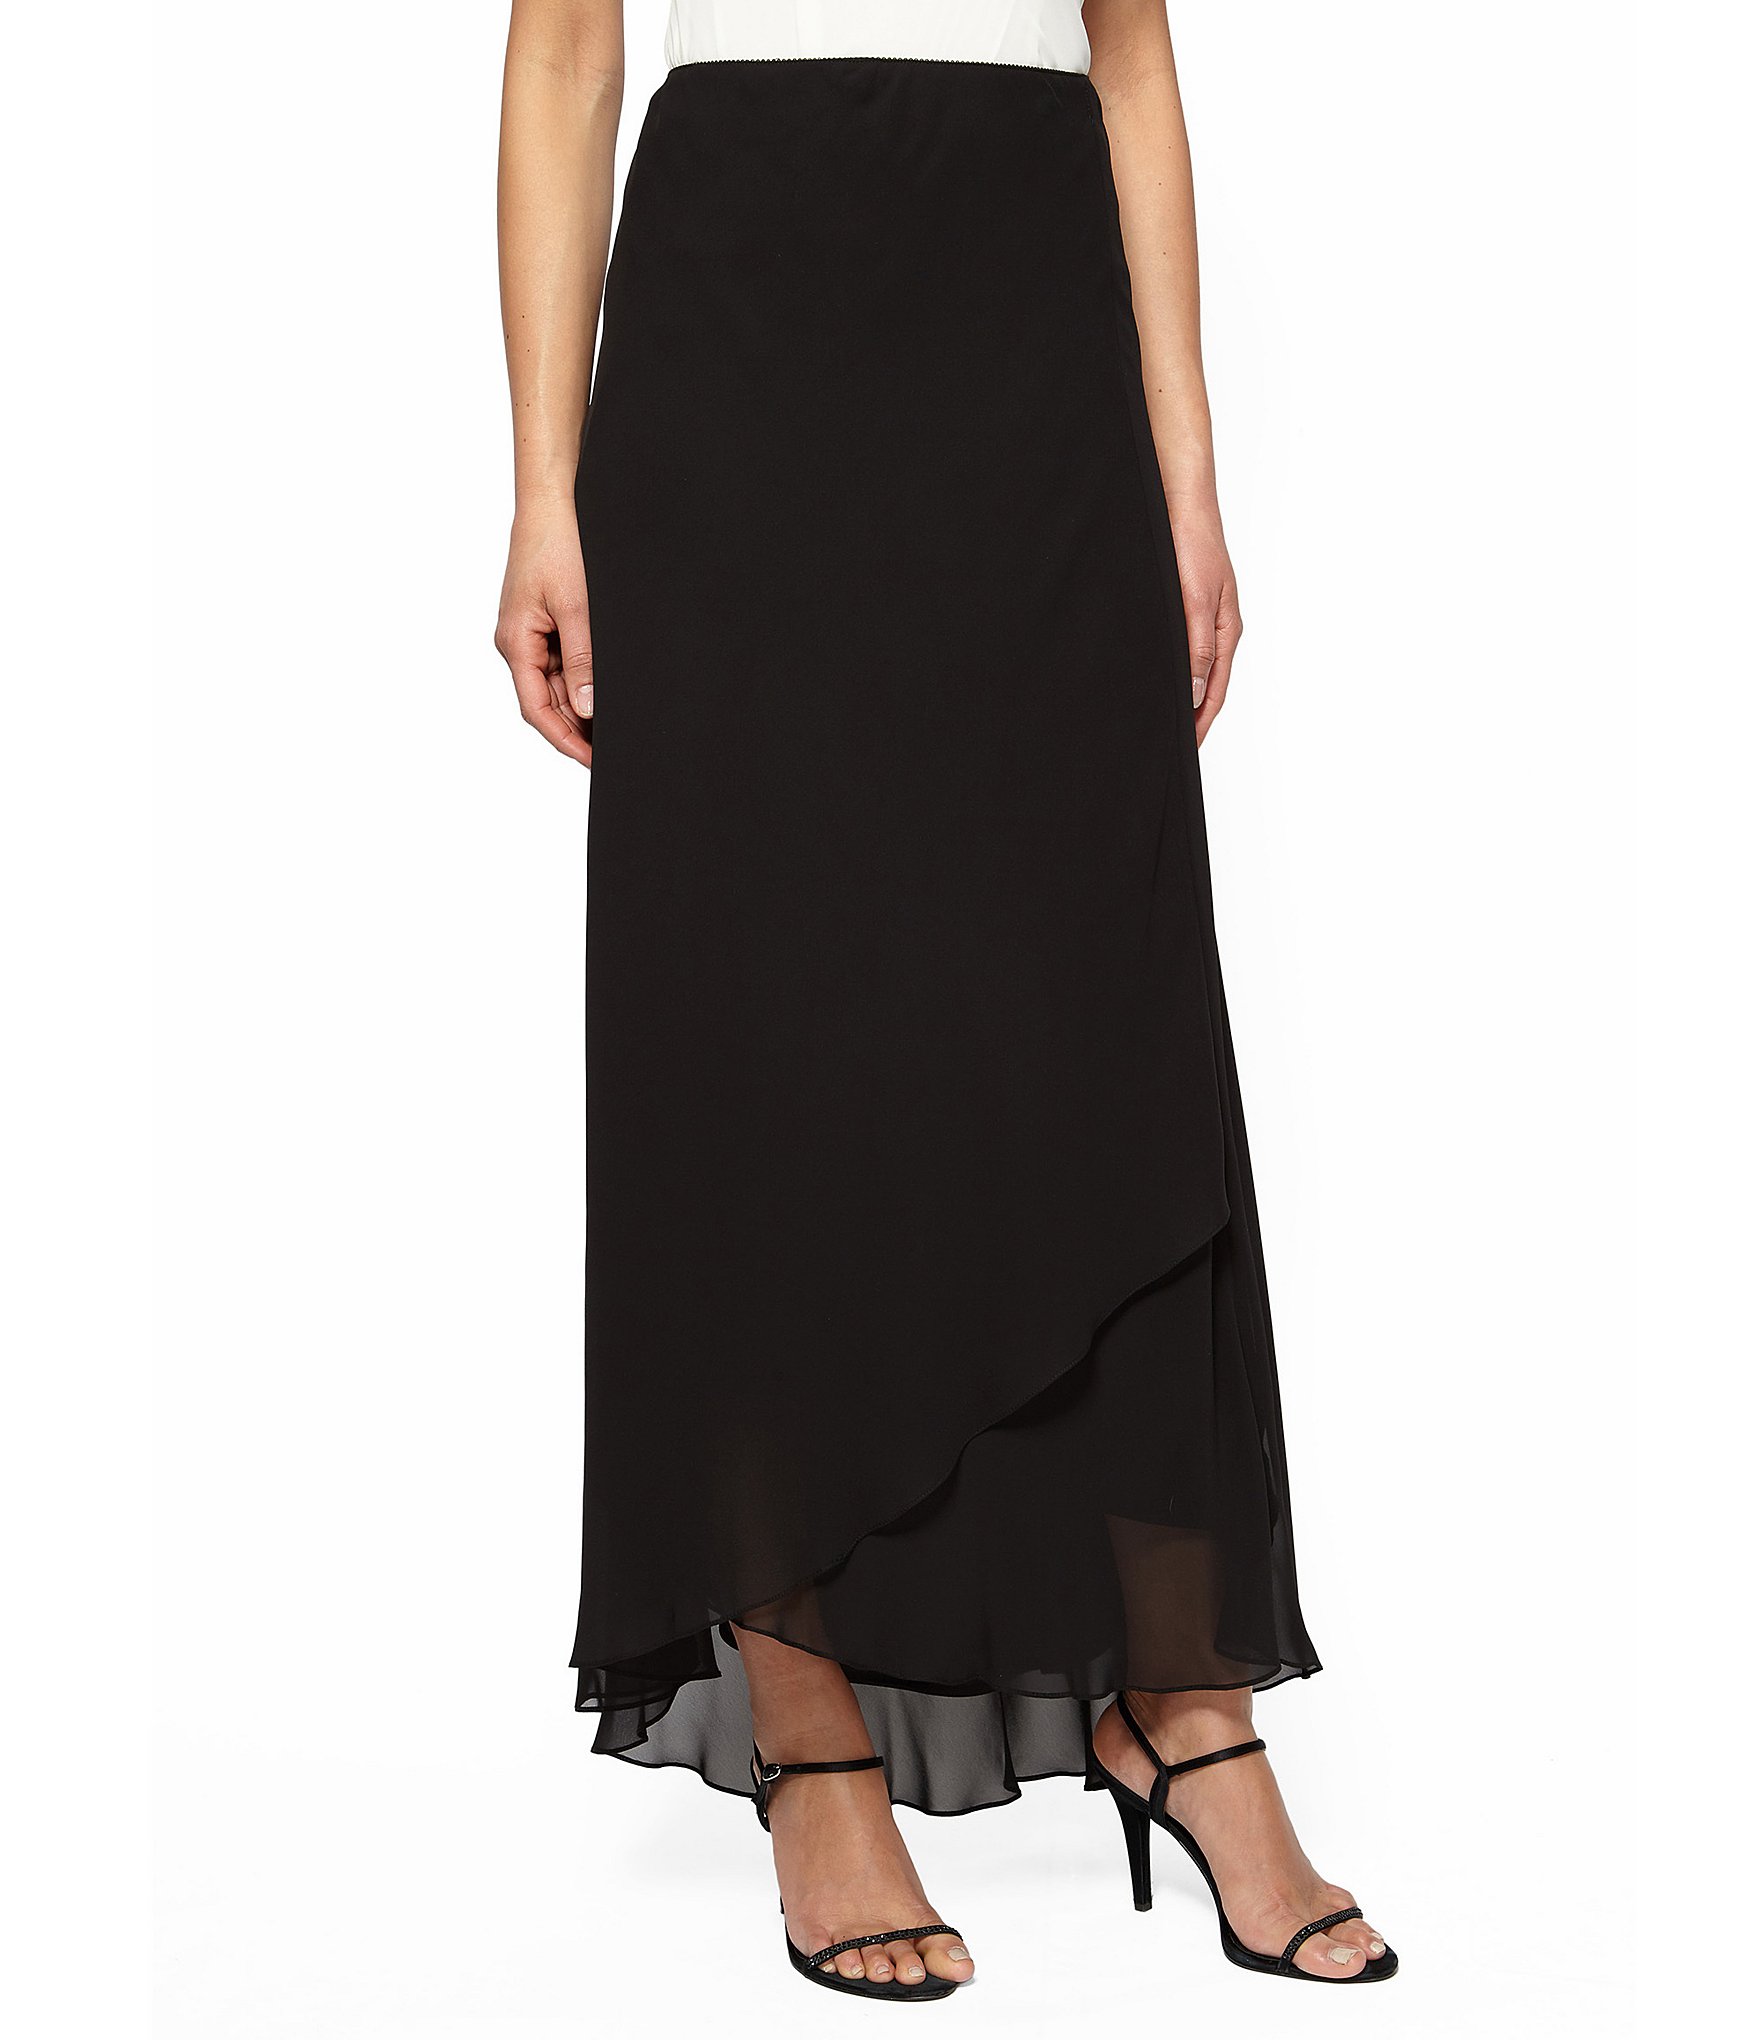 Discover more than 253 long black skirt best